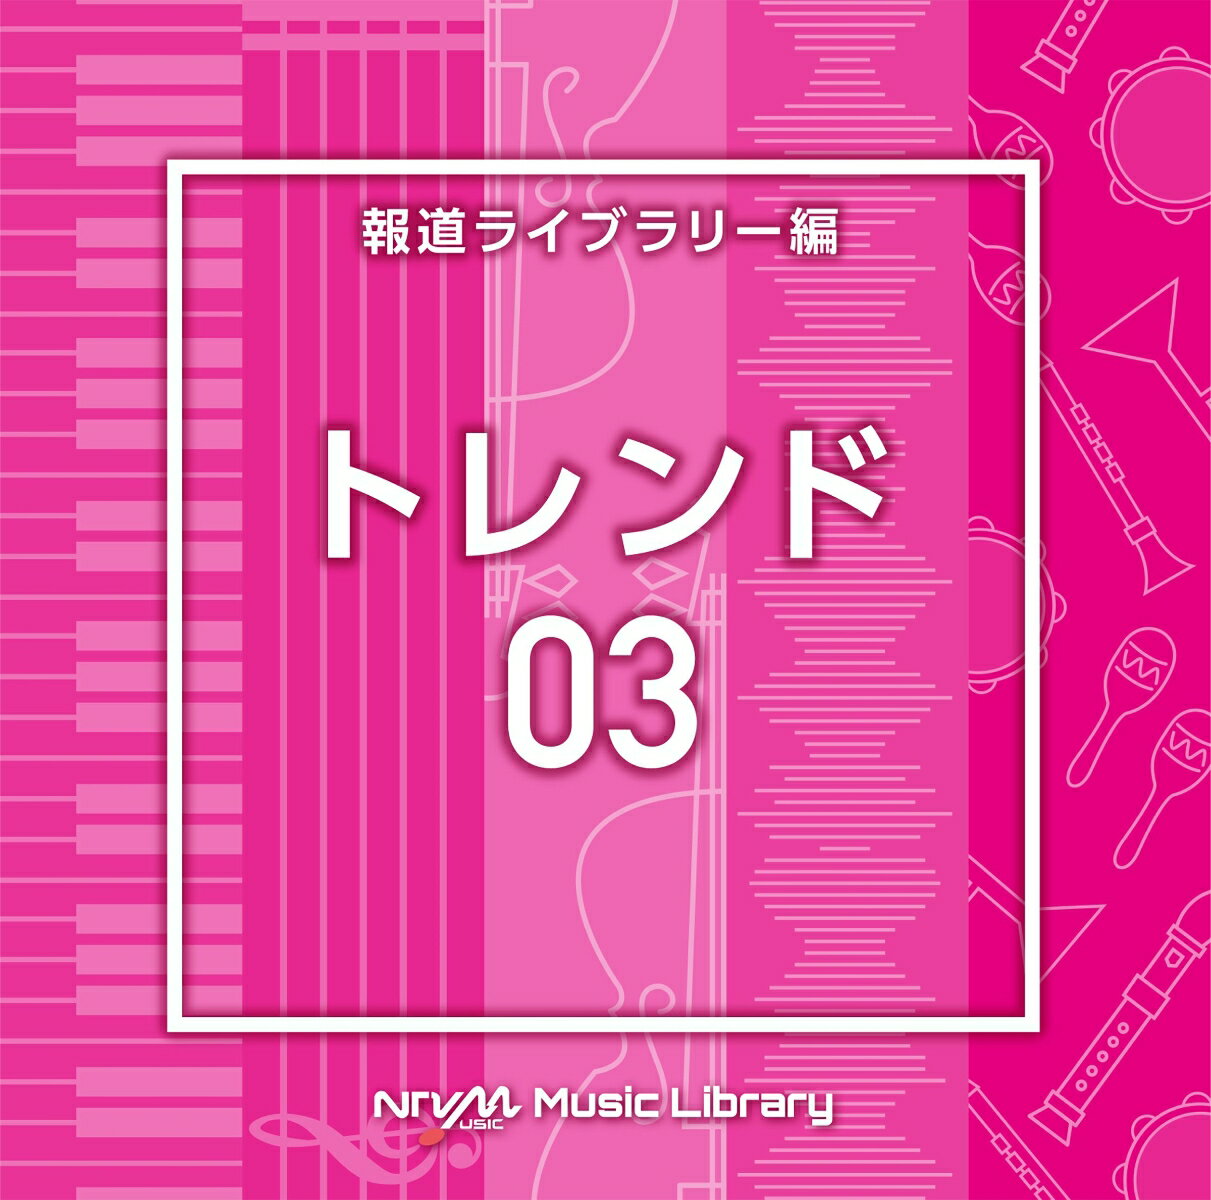 NTVM Music Library 報道ライブラリー編 トレンド03